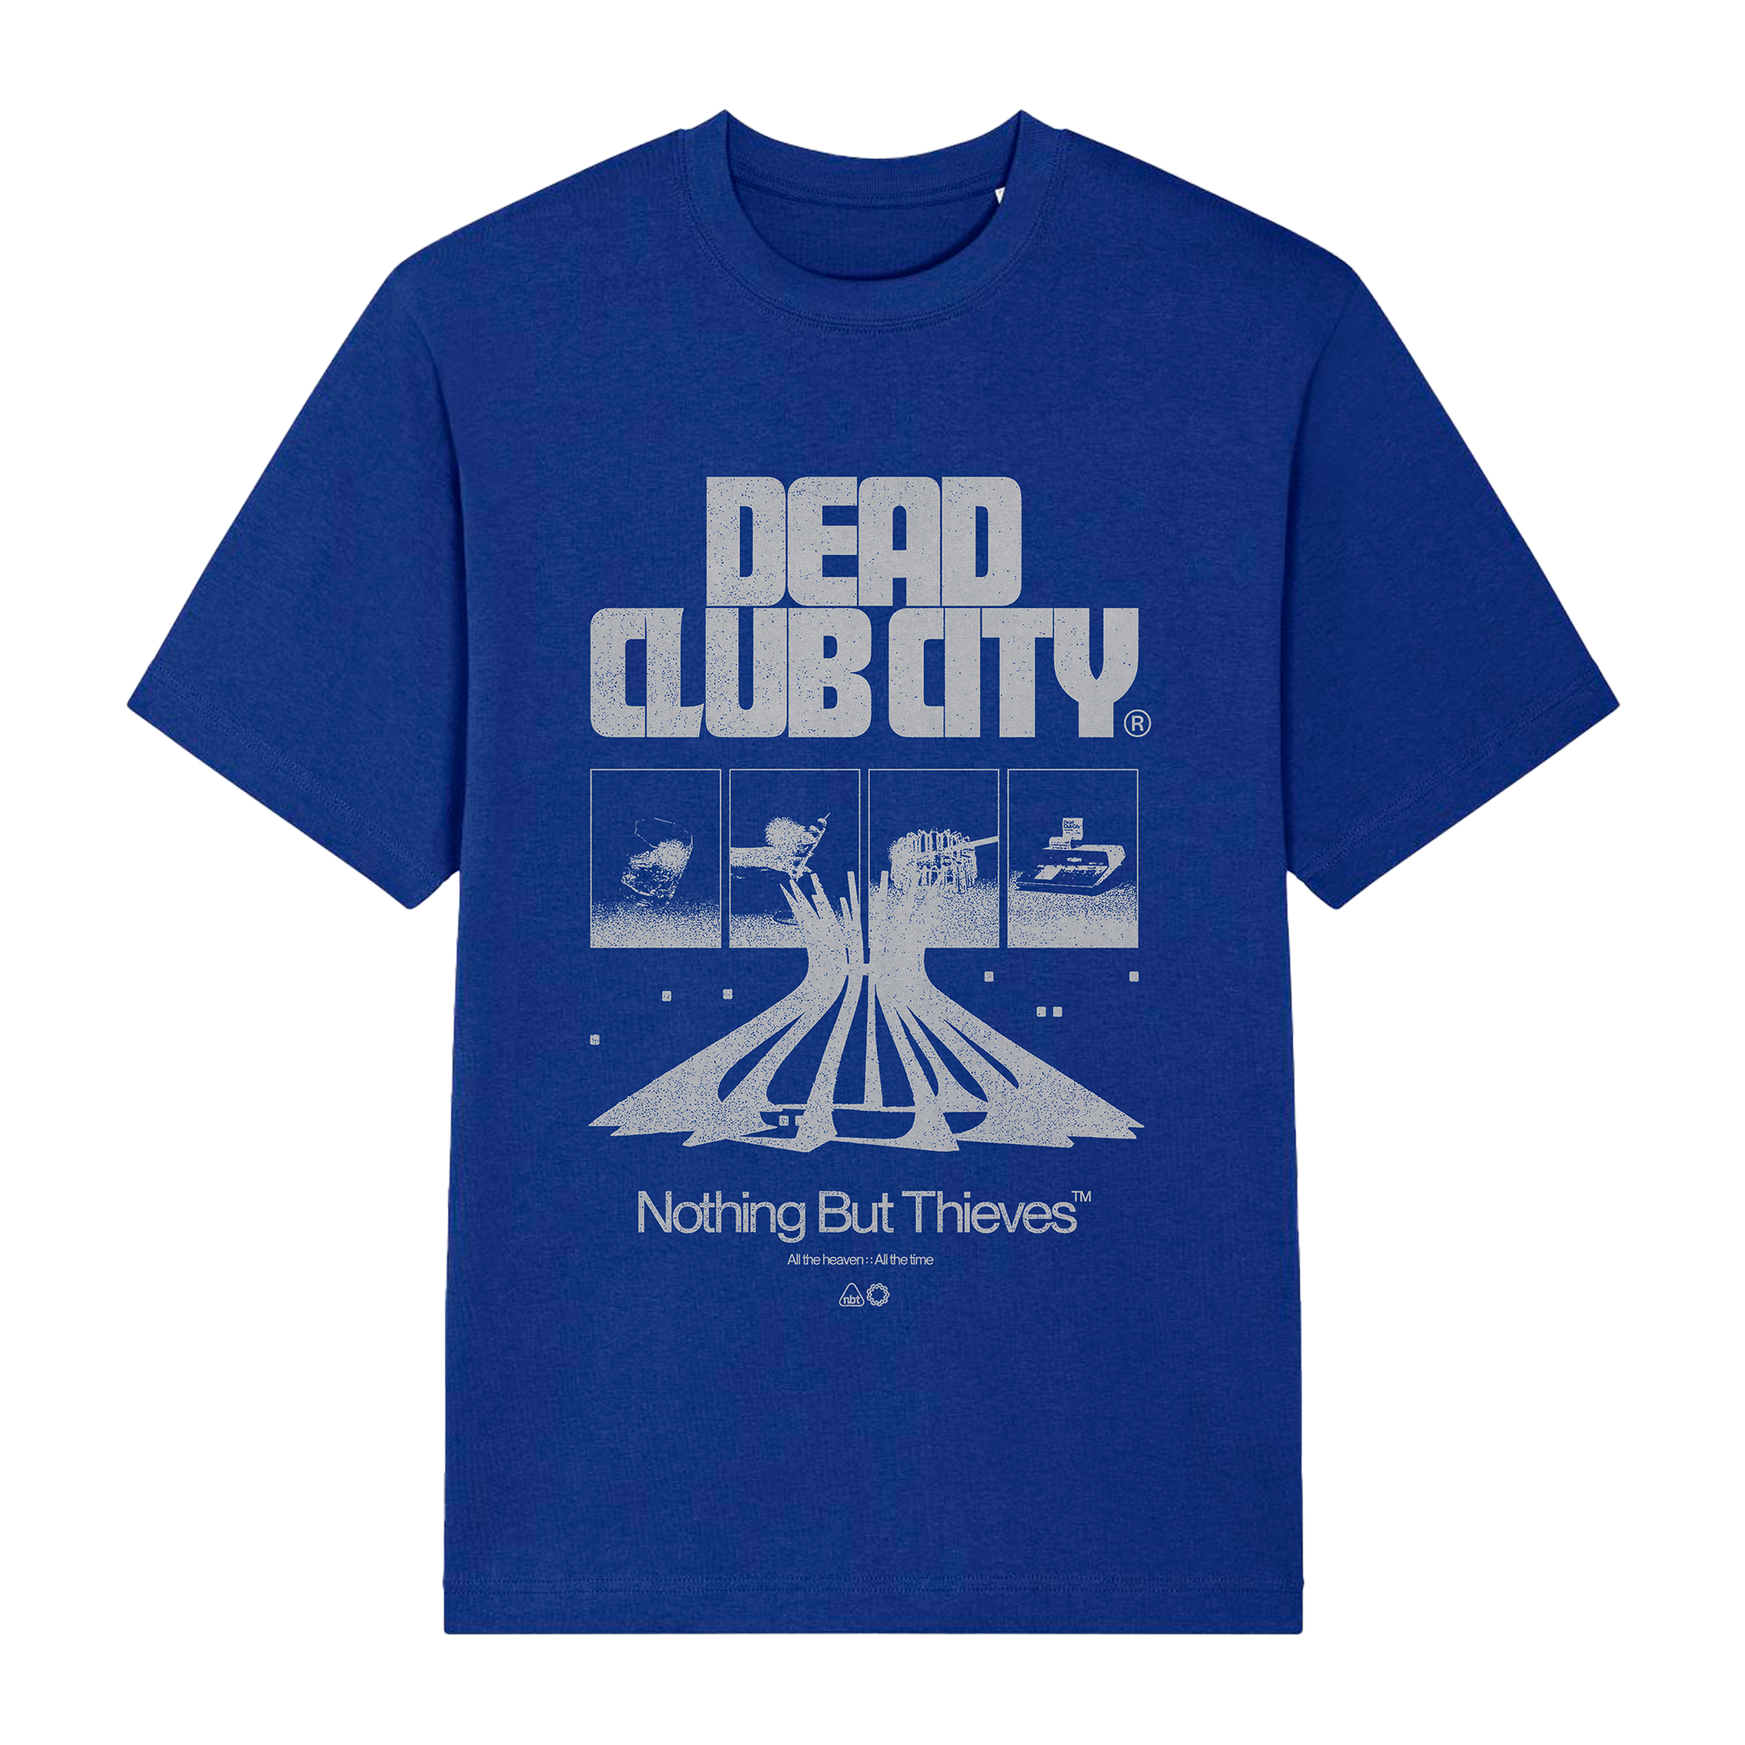 Dead Club City (Blue DLX) T-shirt